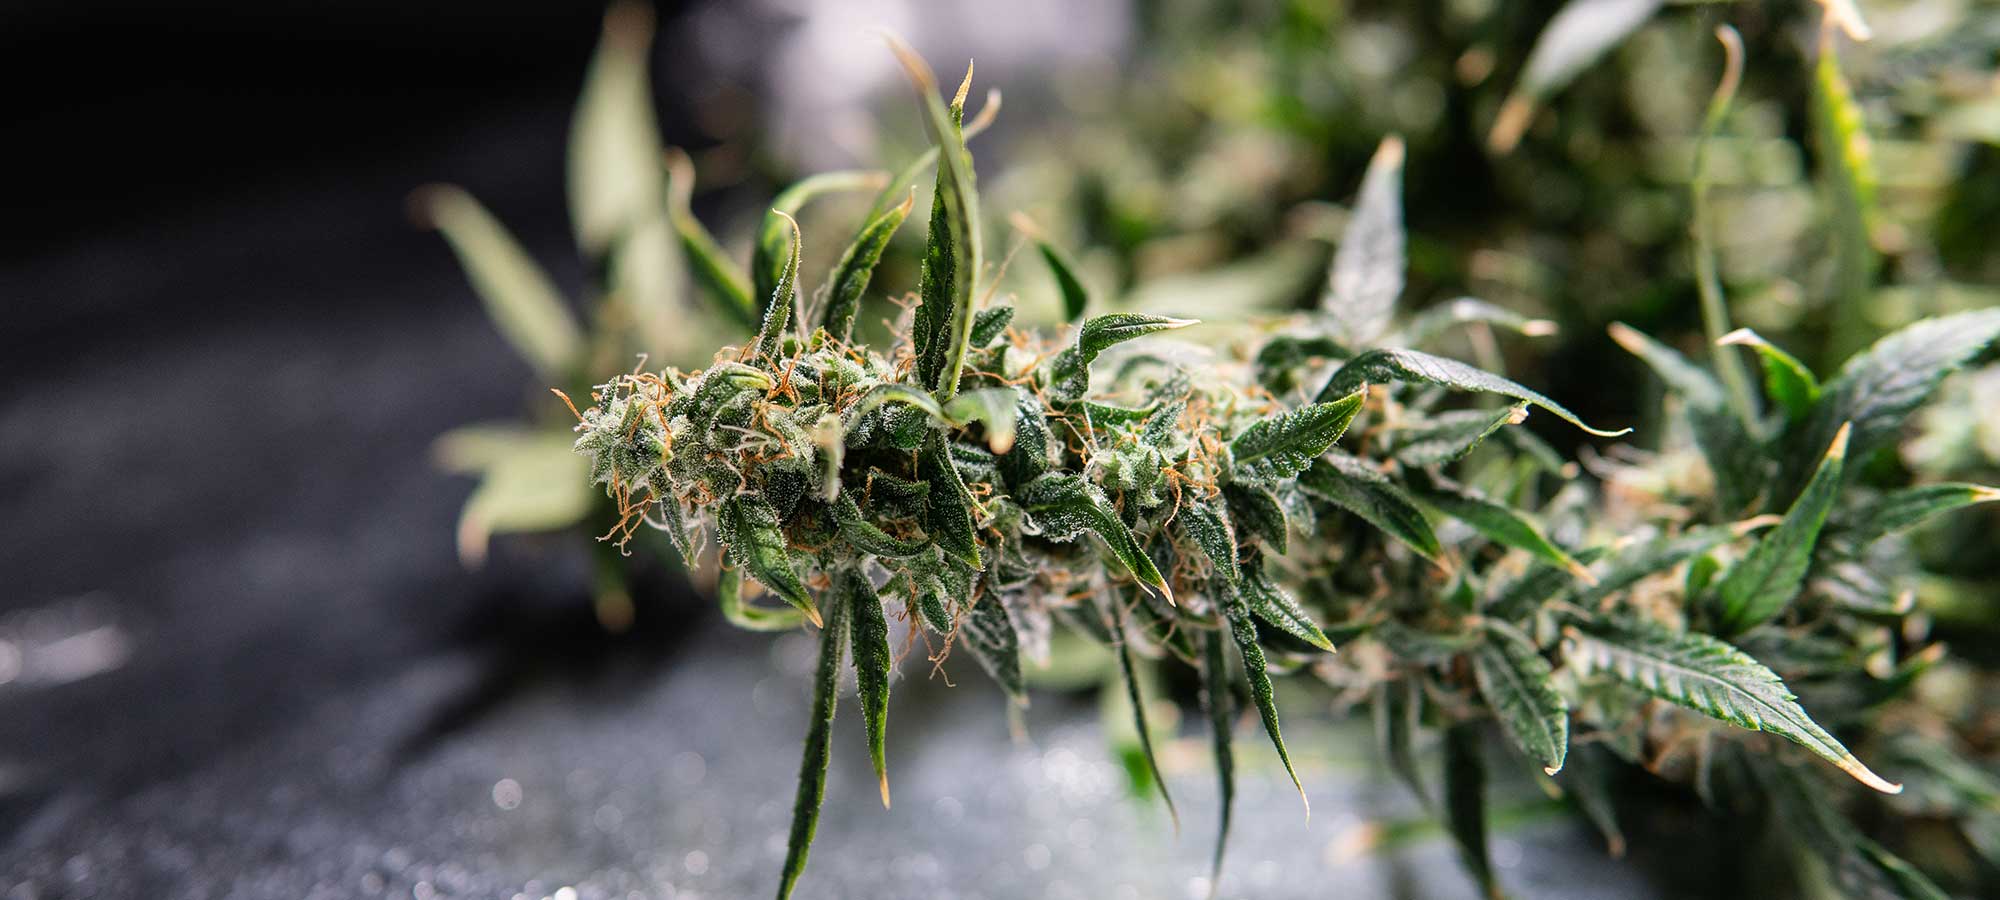 medical marijuana to overcome anxiety